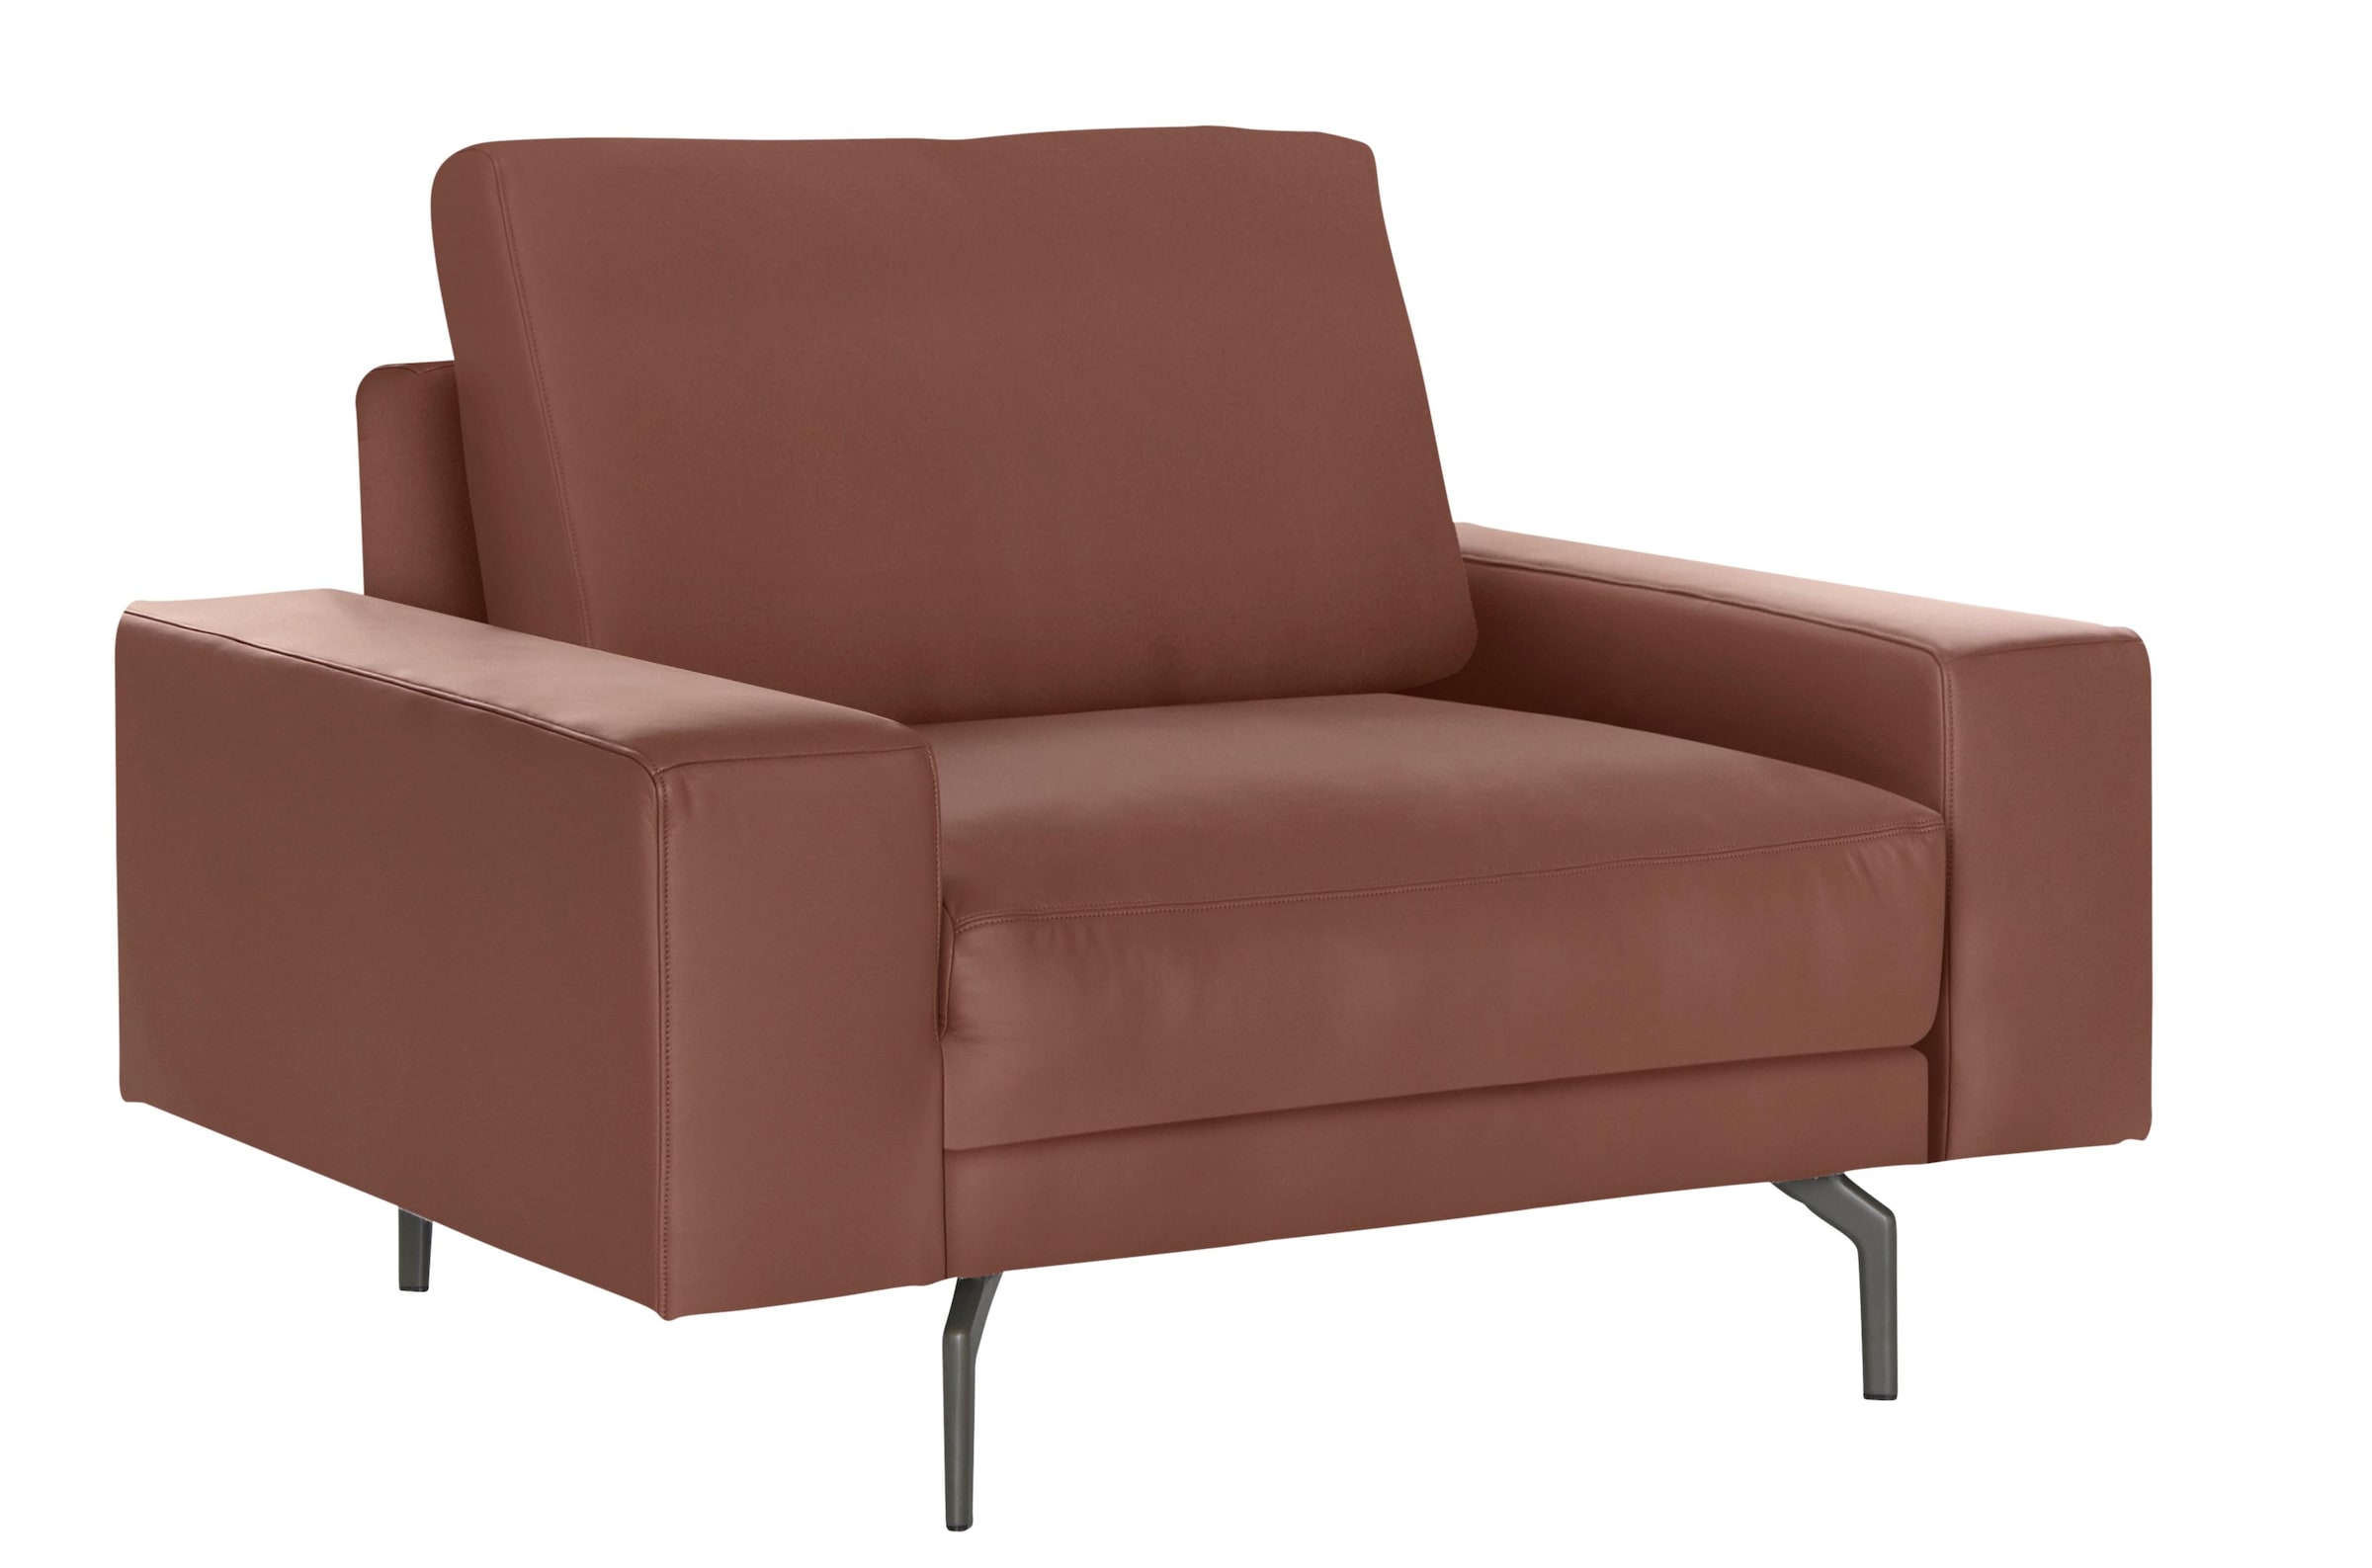 Alugussfüße BAUR Friday breit Black Sessel »hs.450«, hülsta sofa Breite | umbragrau, Armlehne in niedrig, 120 cm